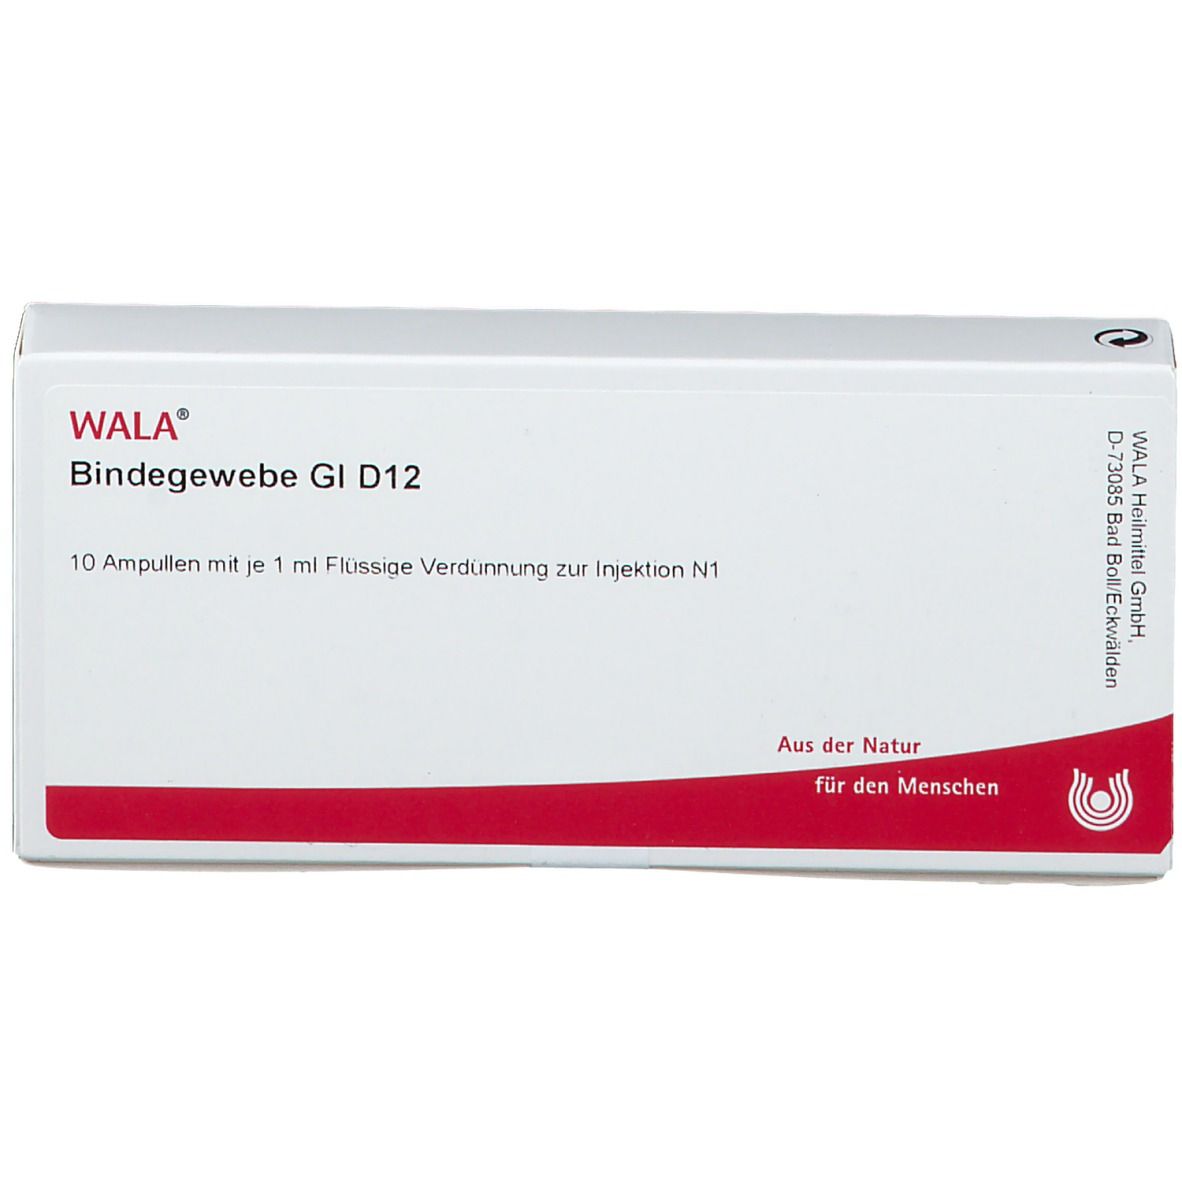 WALA® Bindegewebe Gl D 12